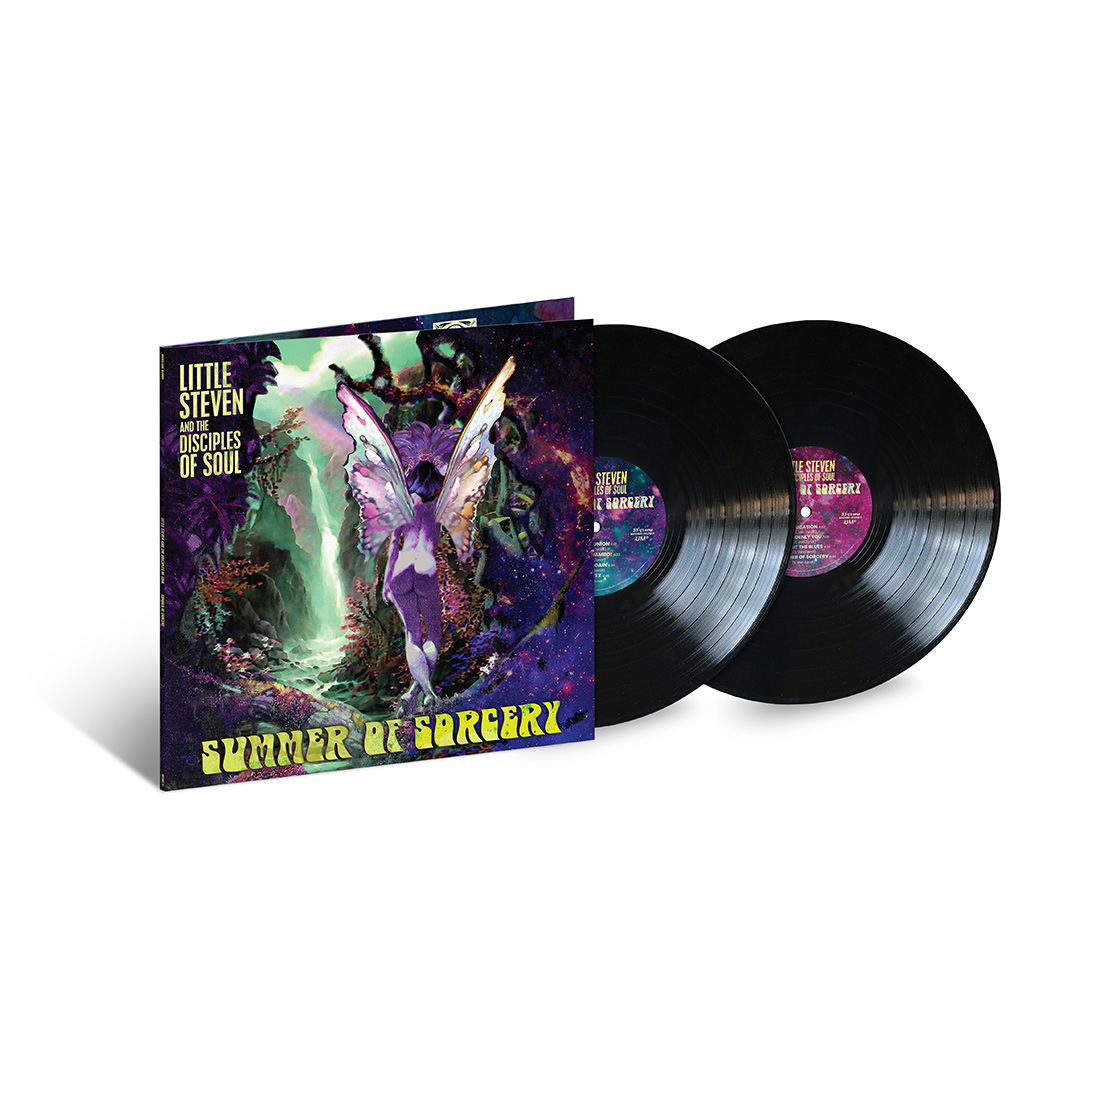 Little Steven, The Interstellar Jazz Renegades - Summer Of Sorcery: Vinyl 2LP